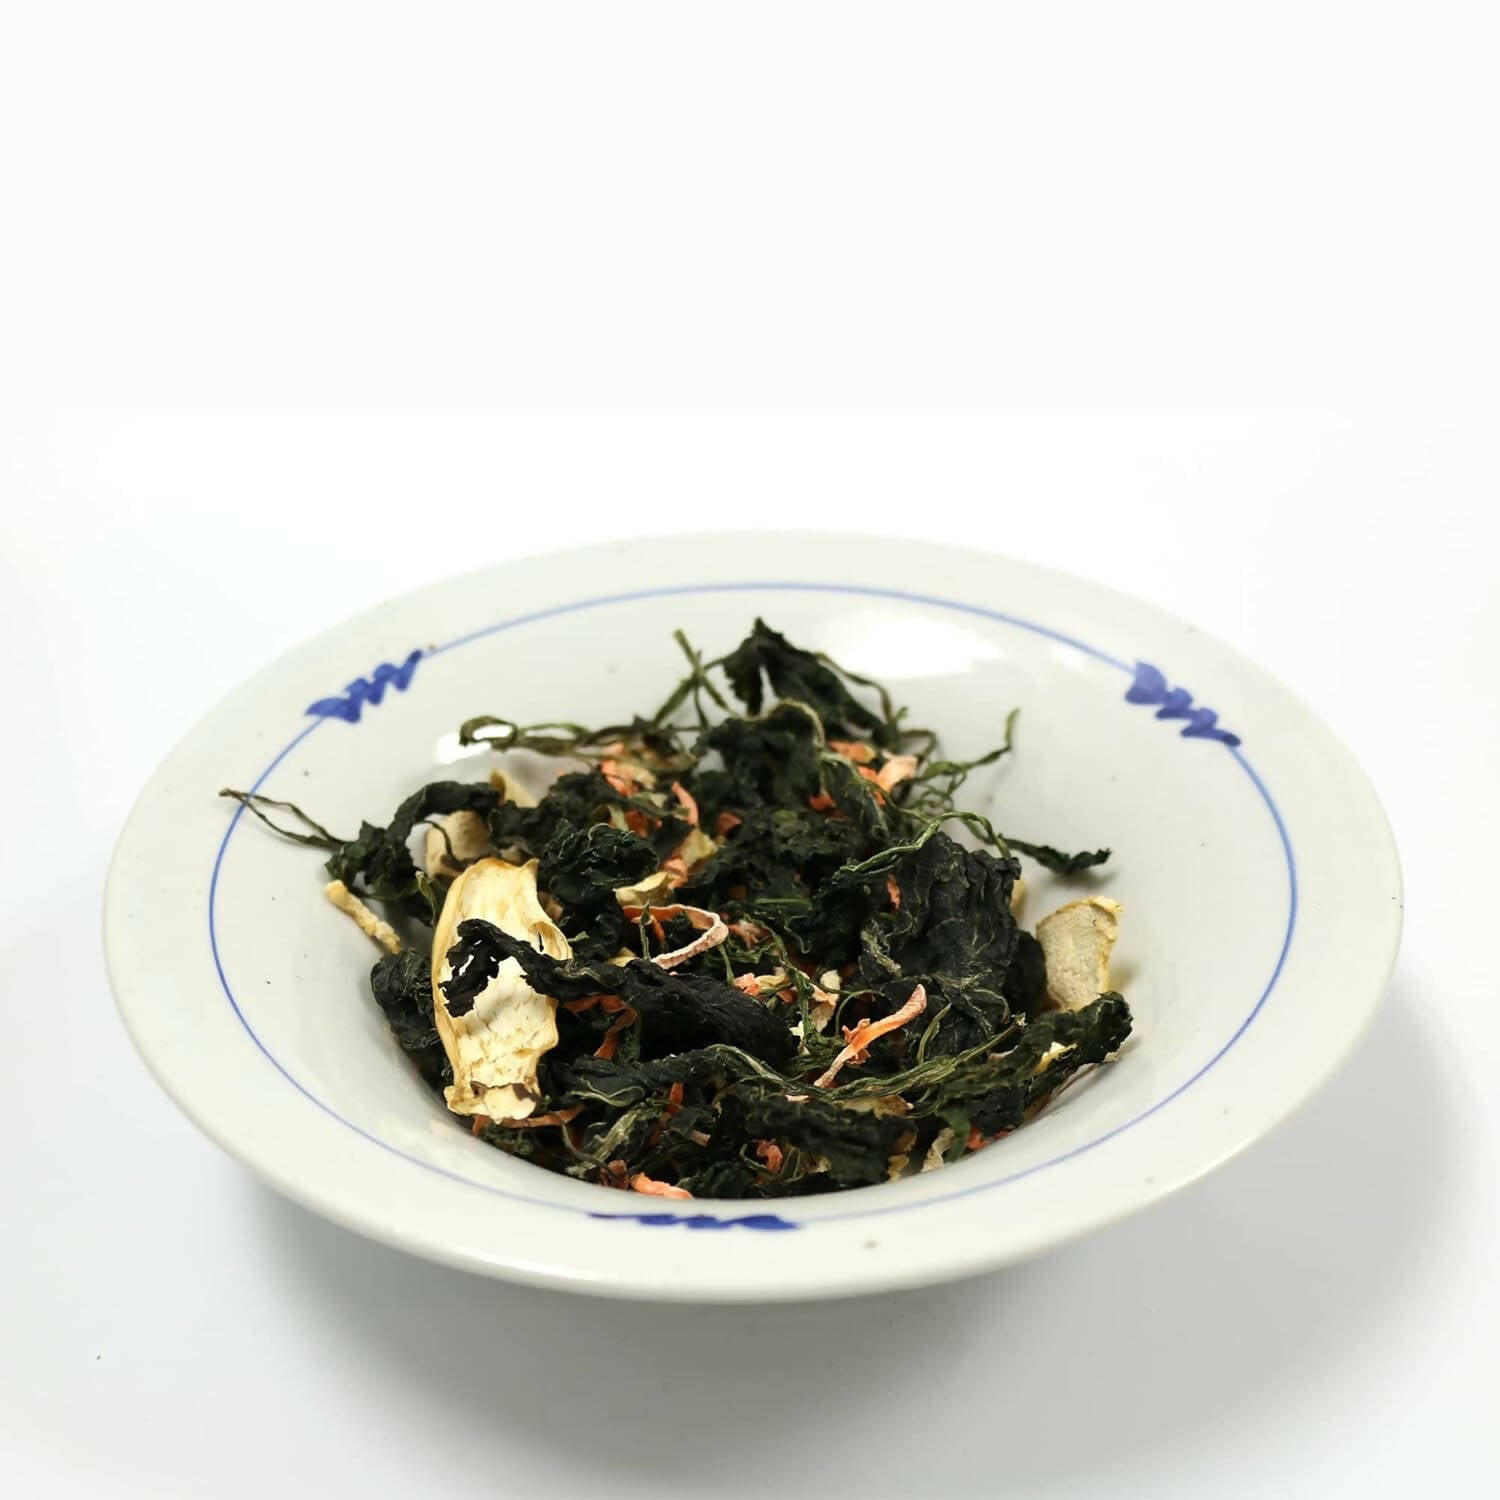 Gurye Uncle Dried Vegetable Mix for Bibimbap - [구례삼촌] 영양나물비빔밥 믹스 건나물 믹스 (1-2인분)